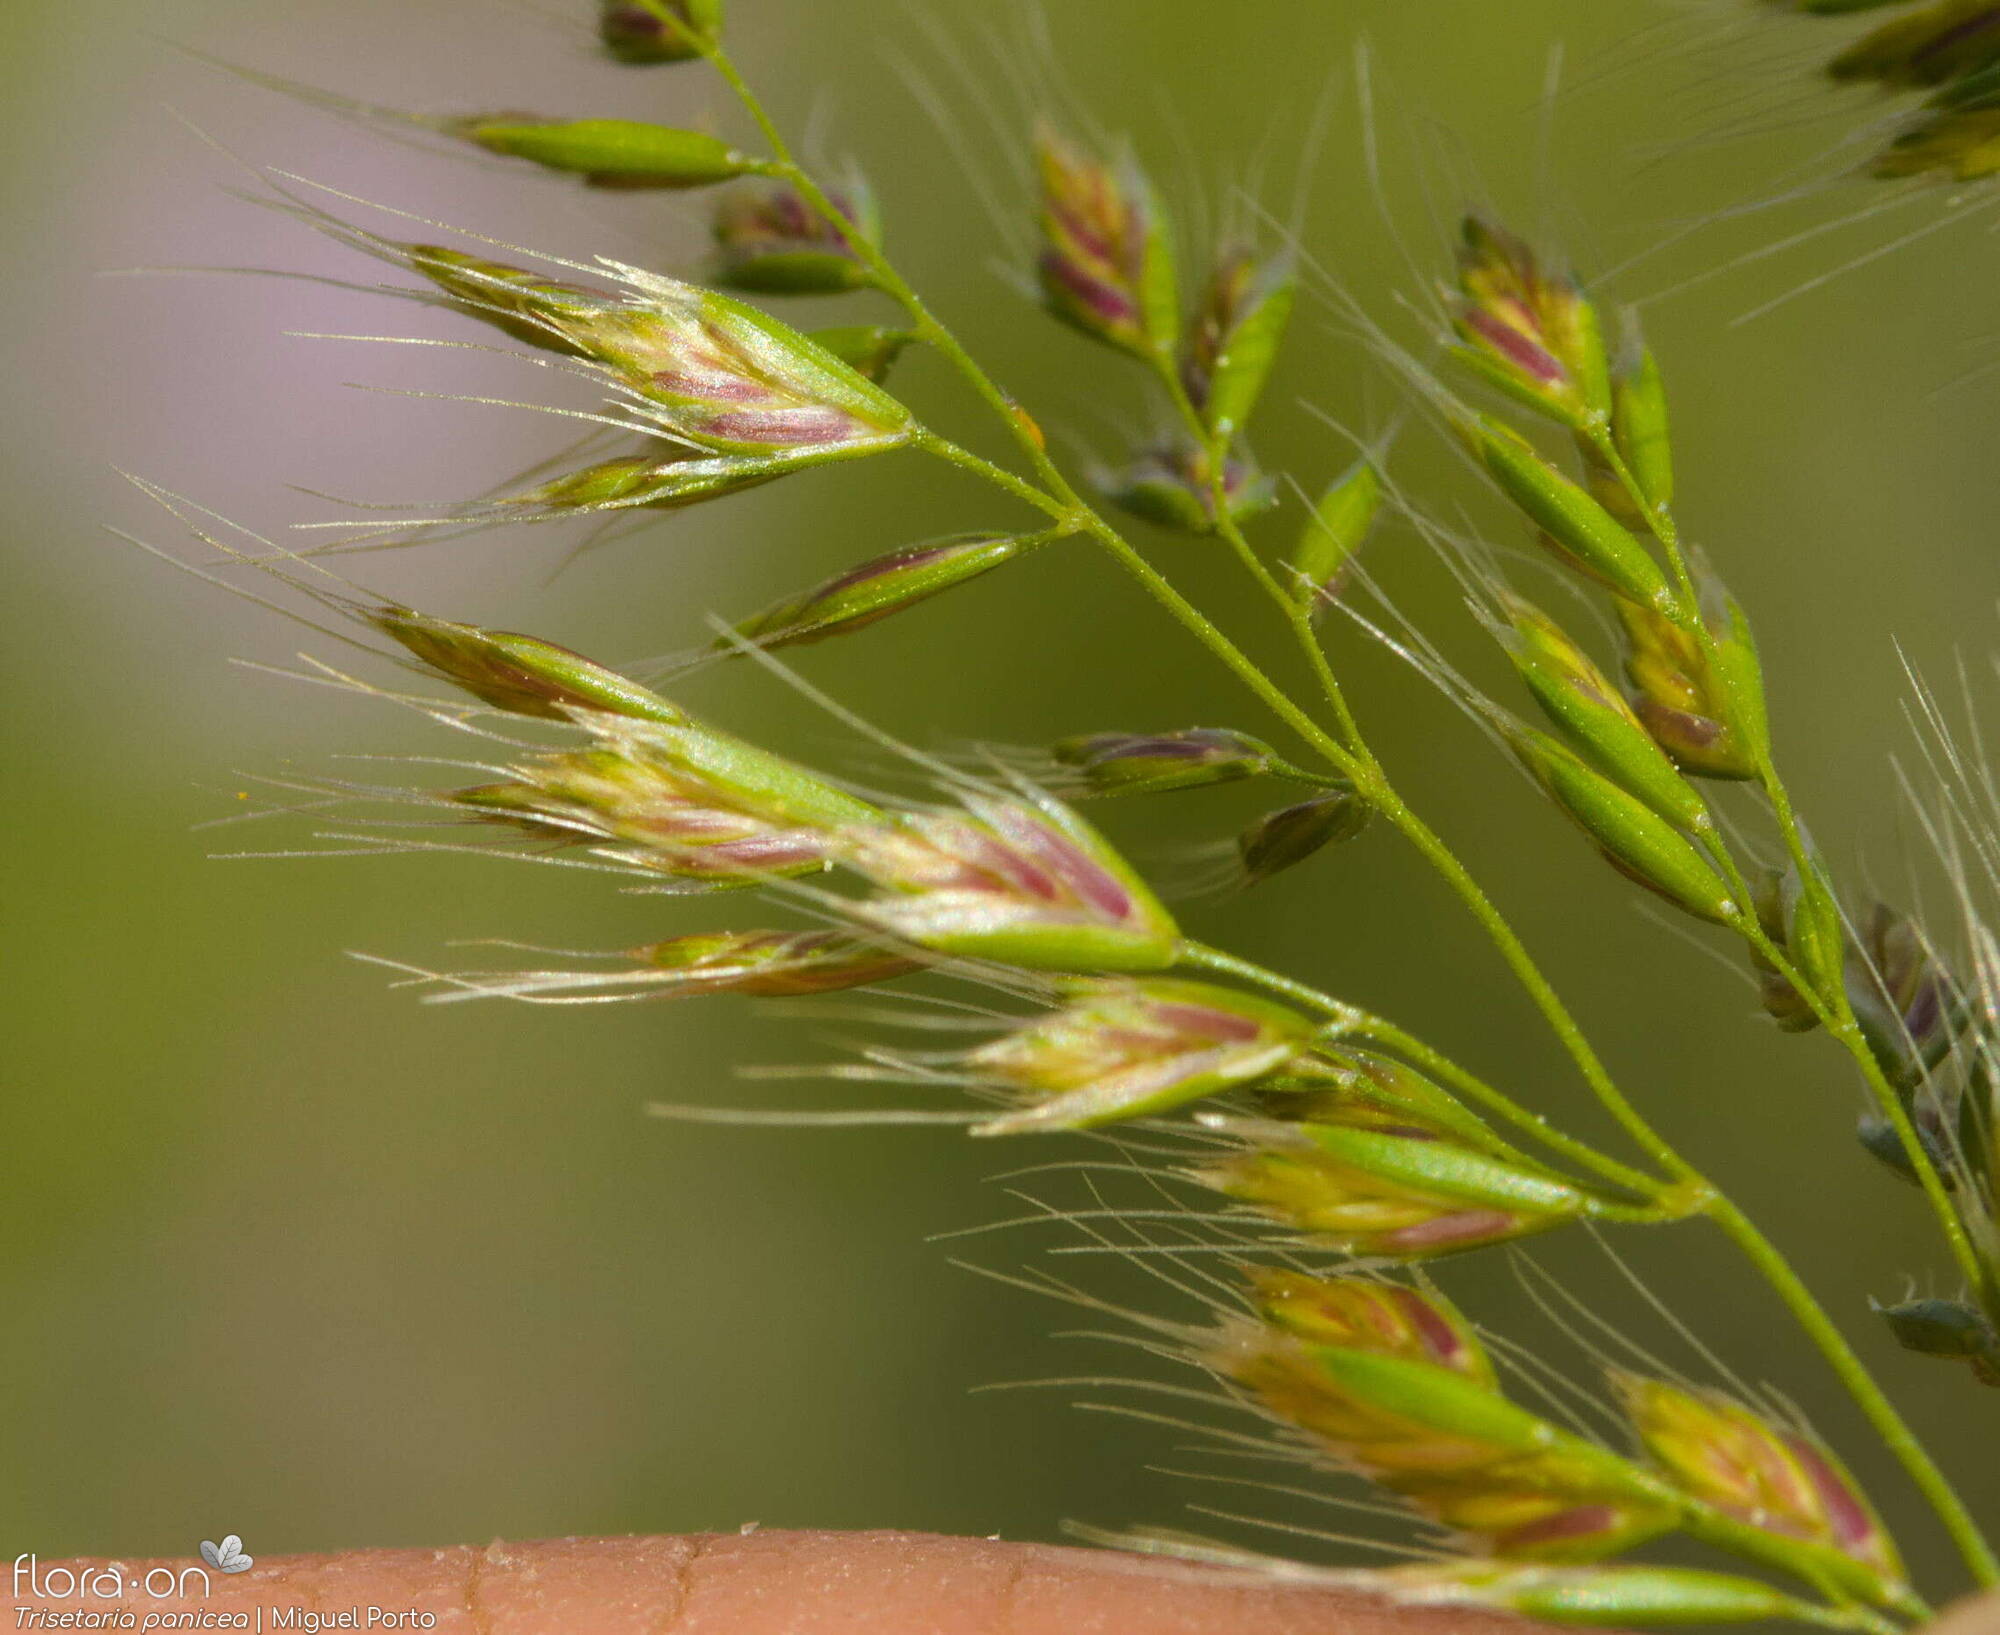 Trisetaria panicea - Flor (close-up) | Miguel Porto; CC BY-NC 4.0